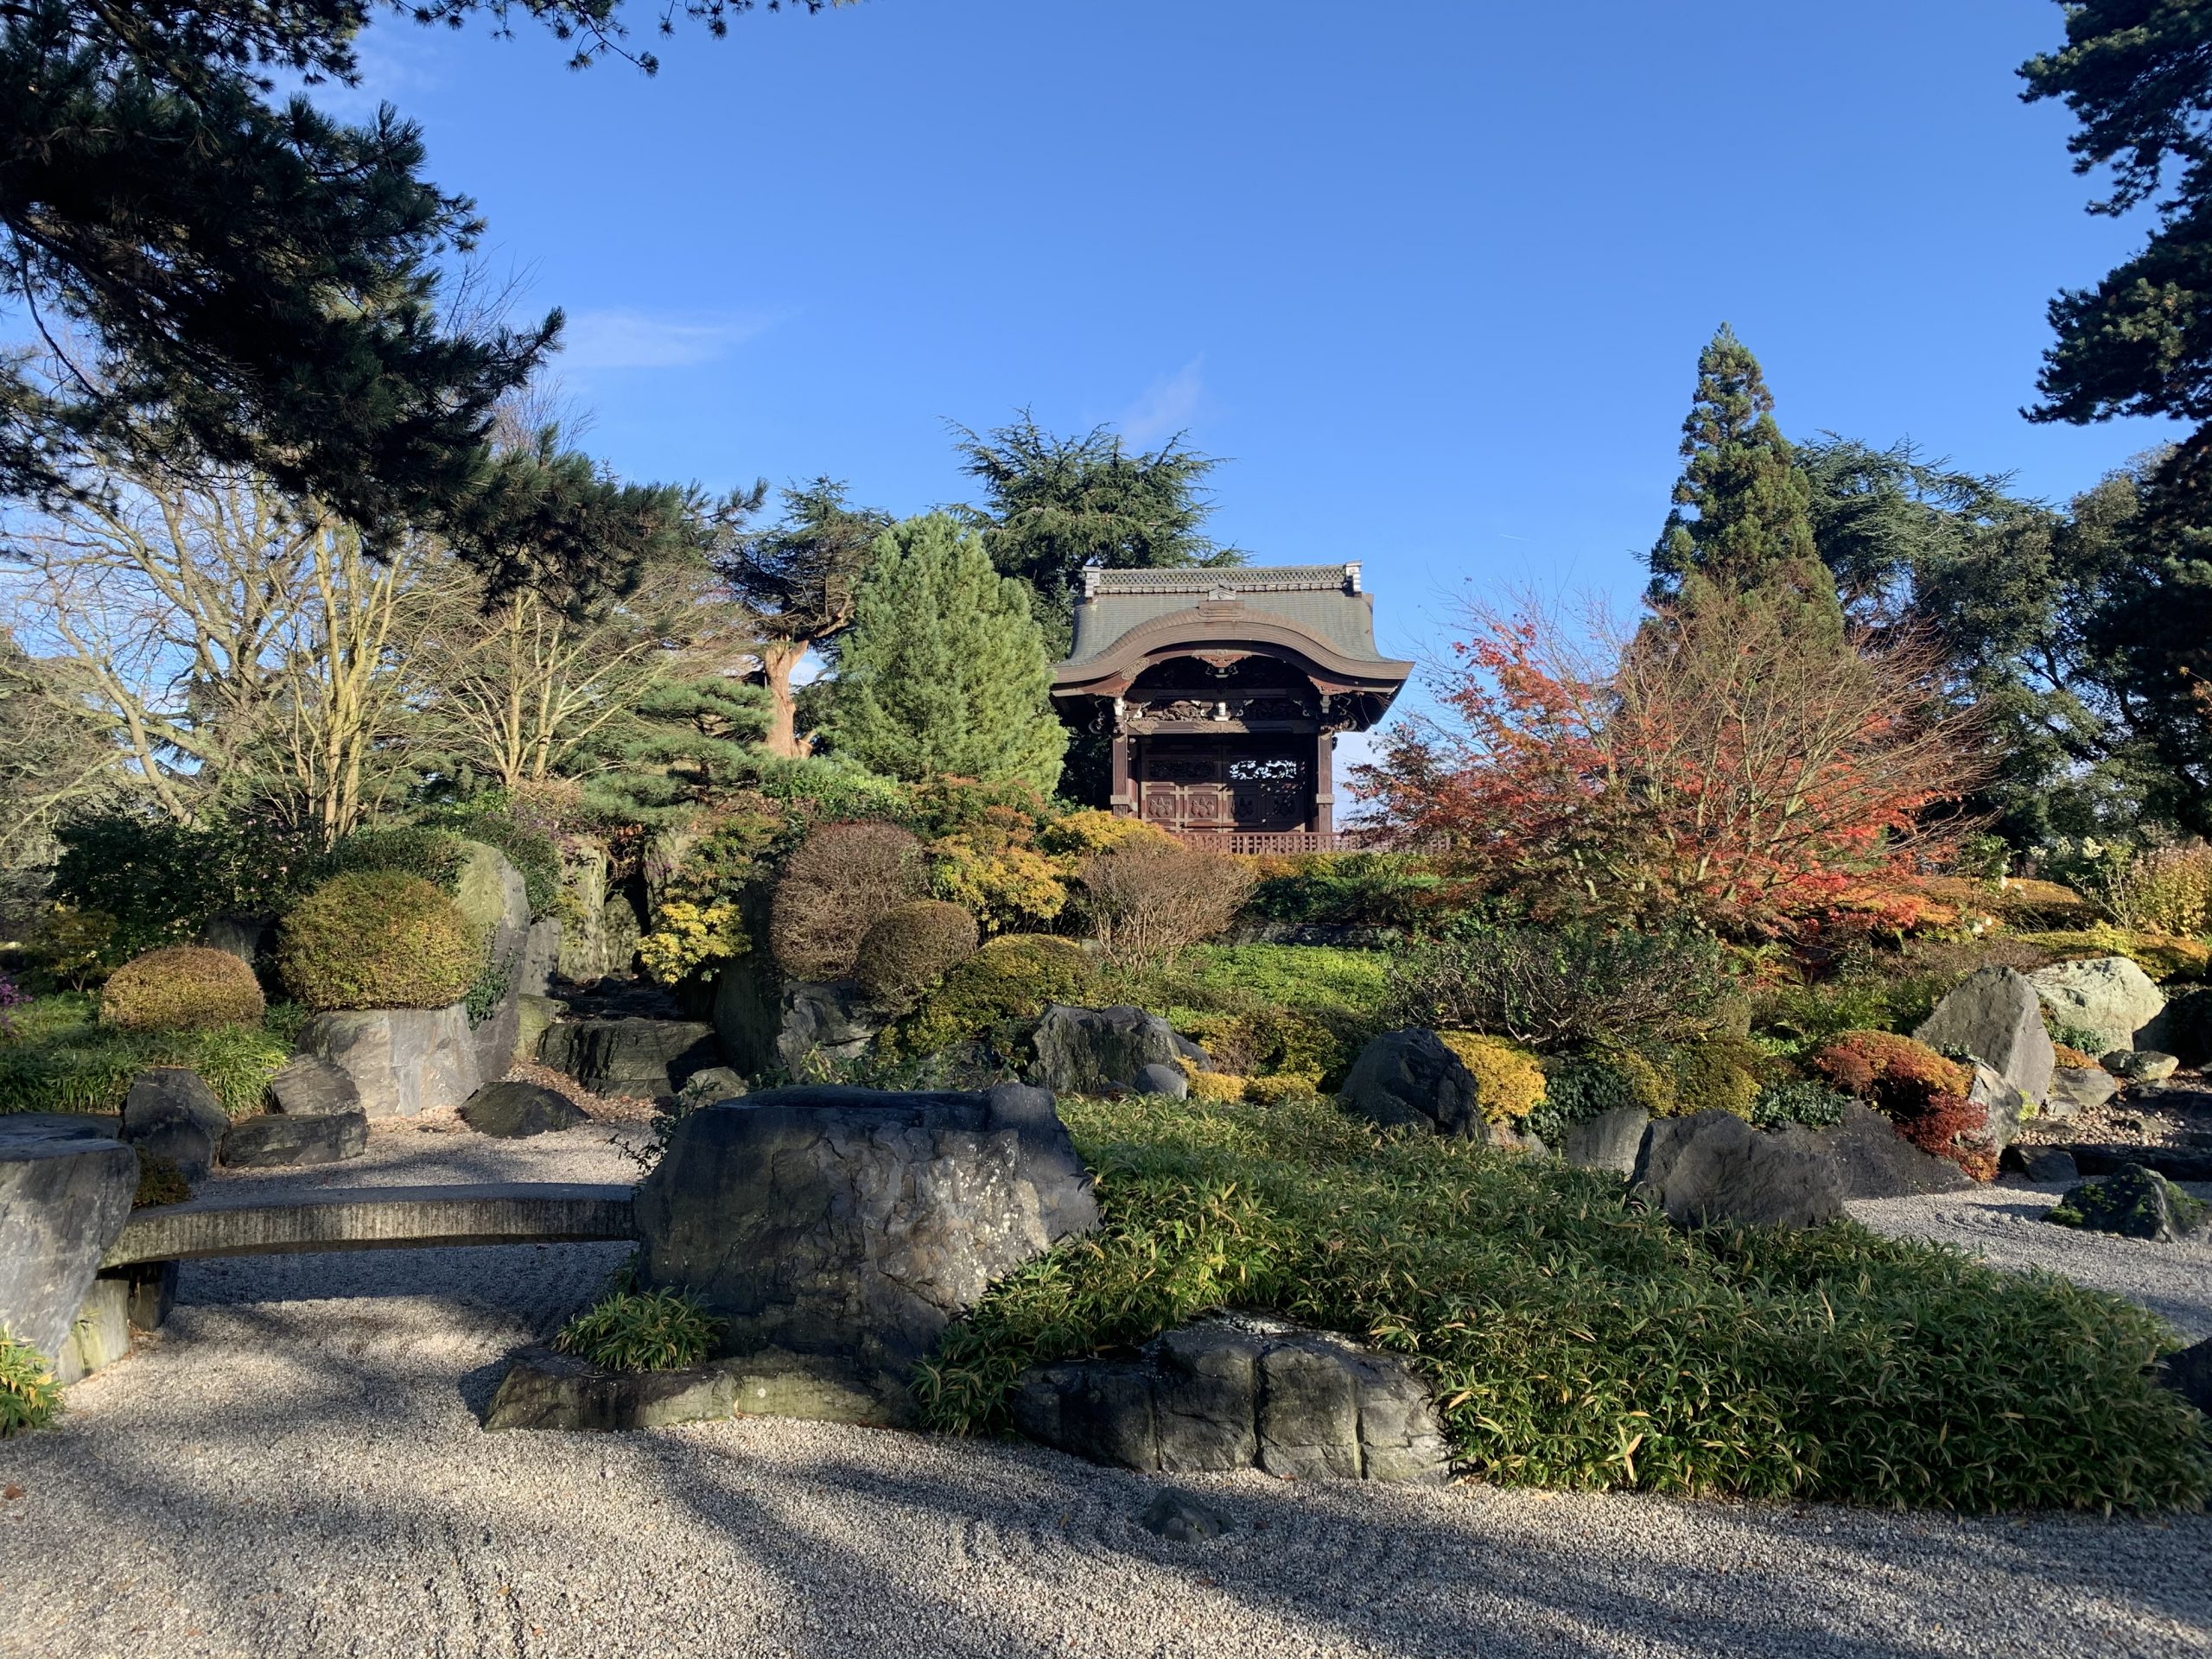 Japanese Garden in Kew